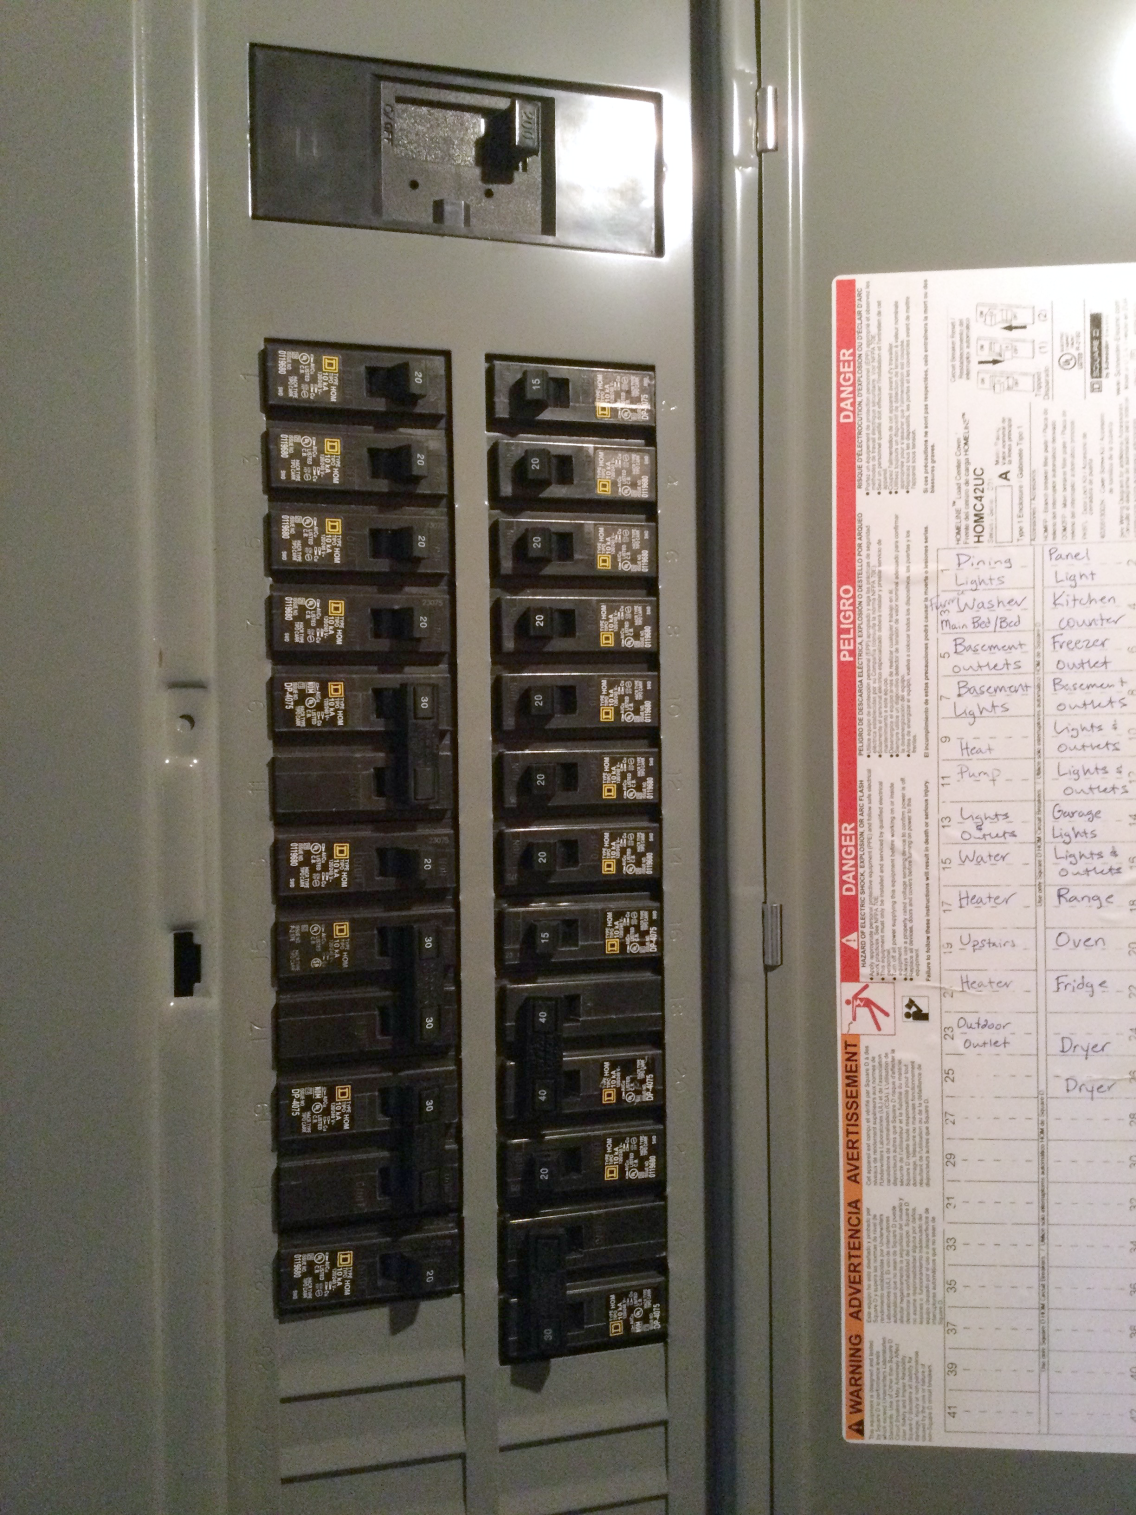 New circuit breaker panel